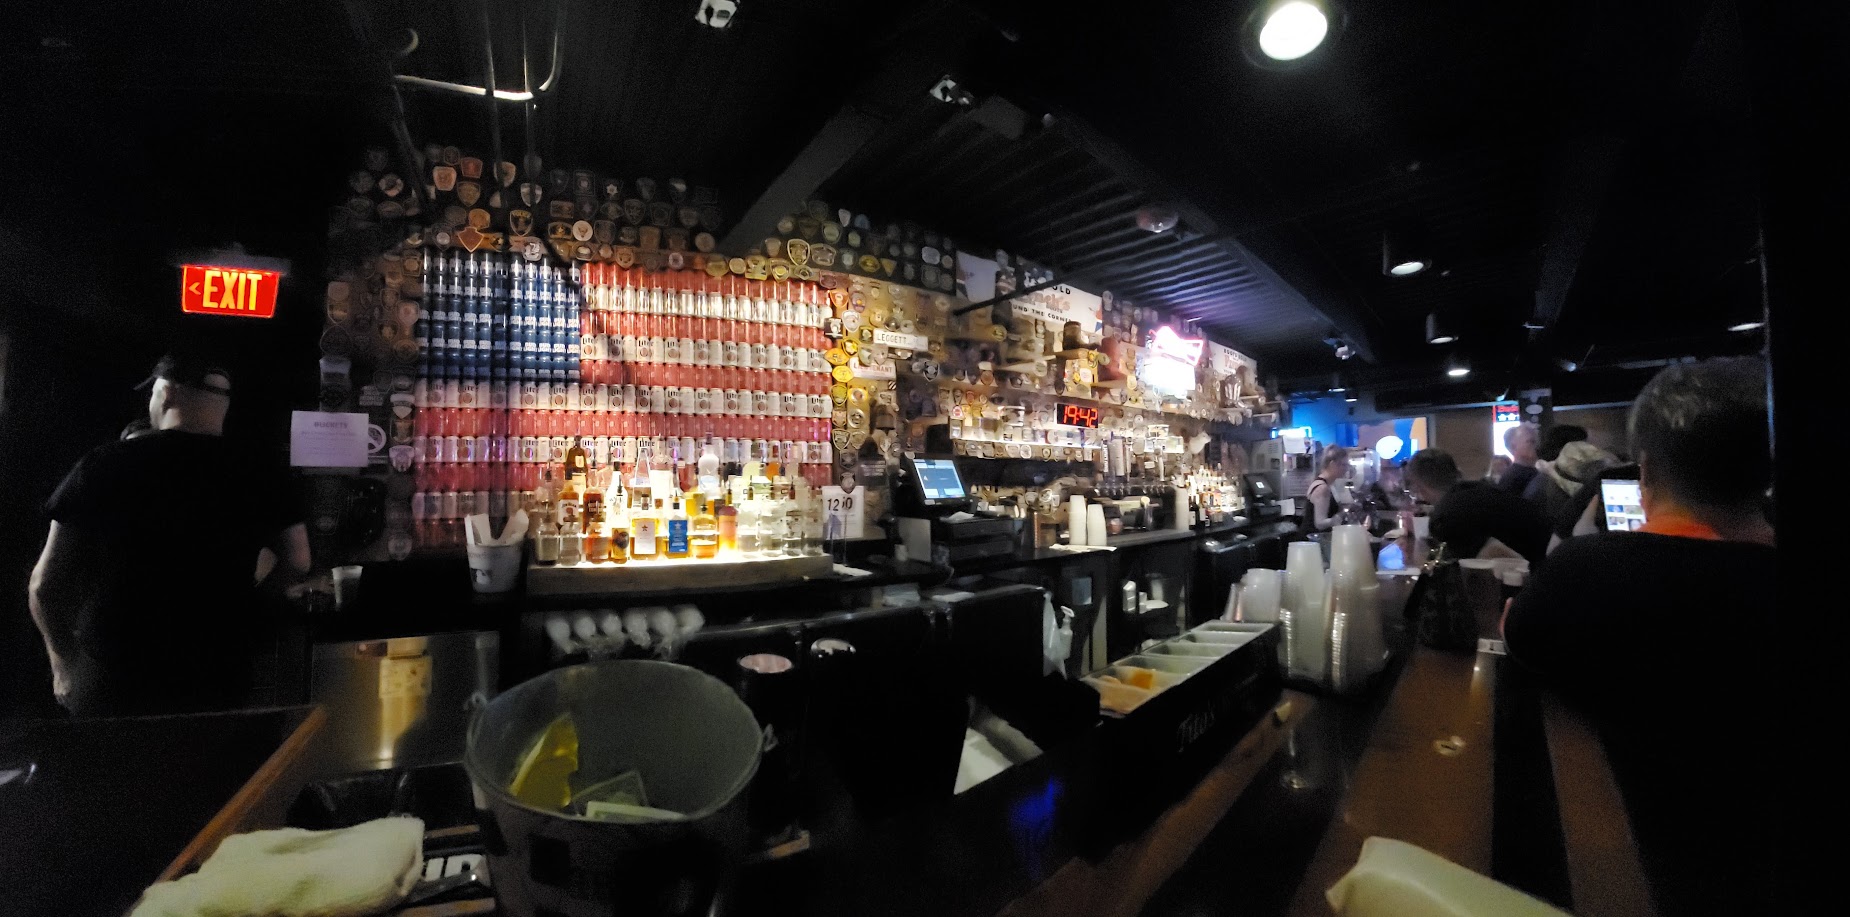 Redneck Riviera Bar & BBQ